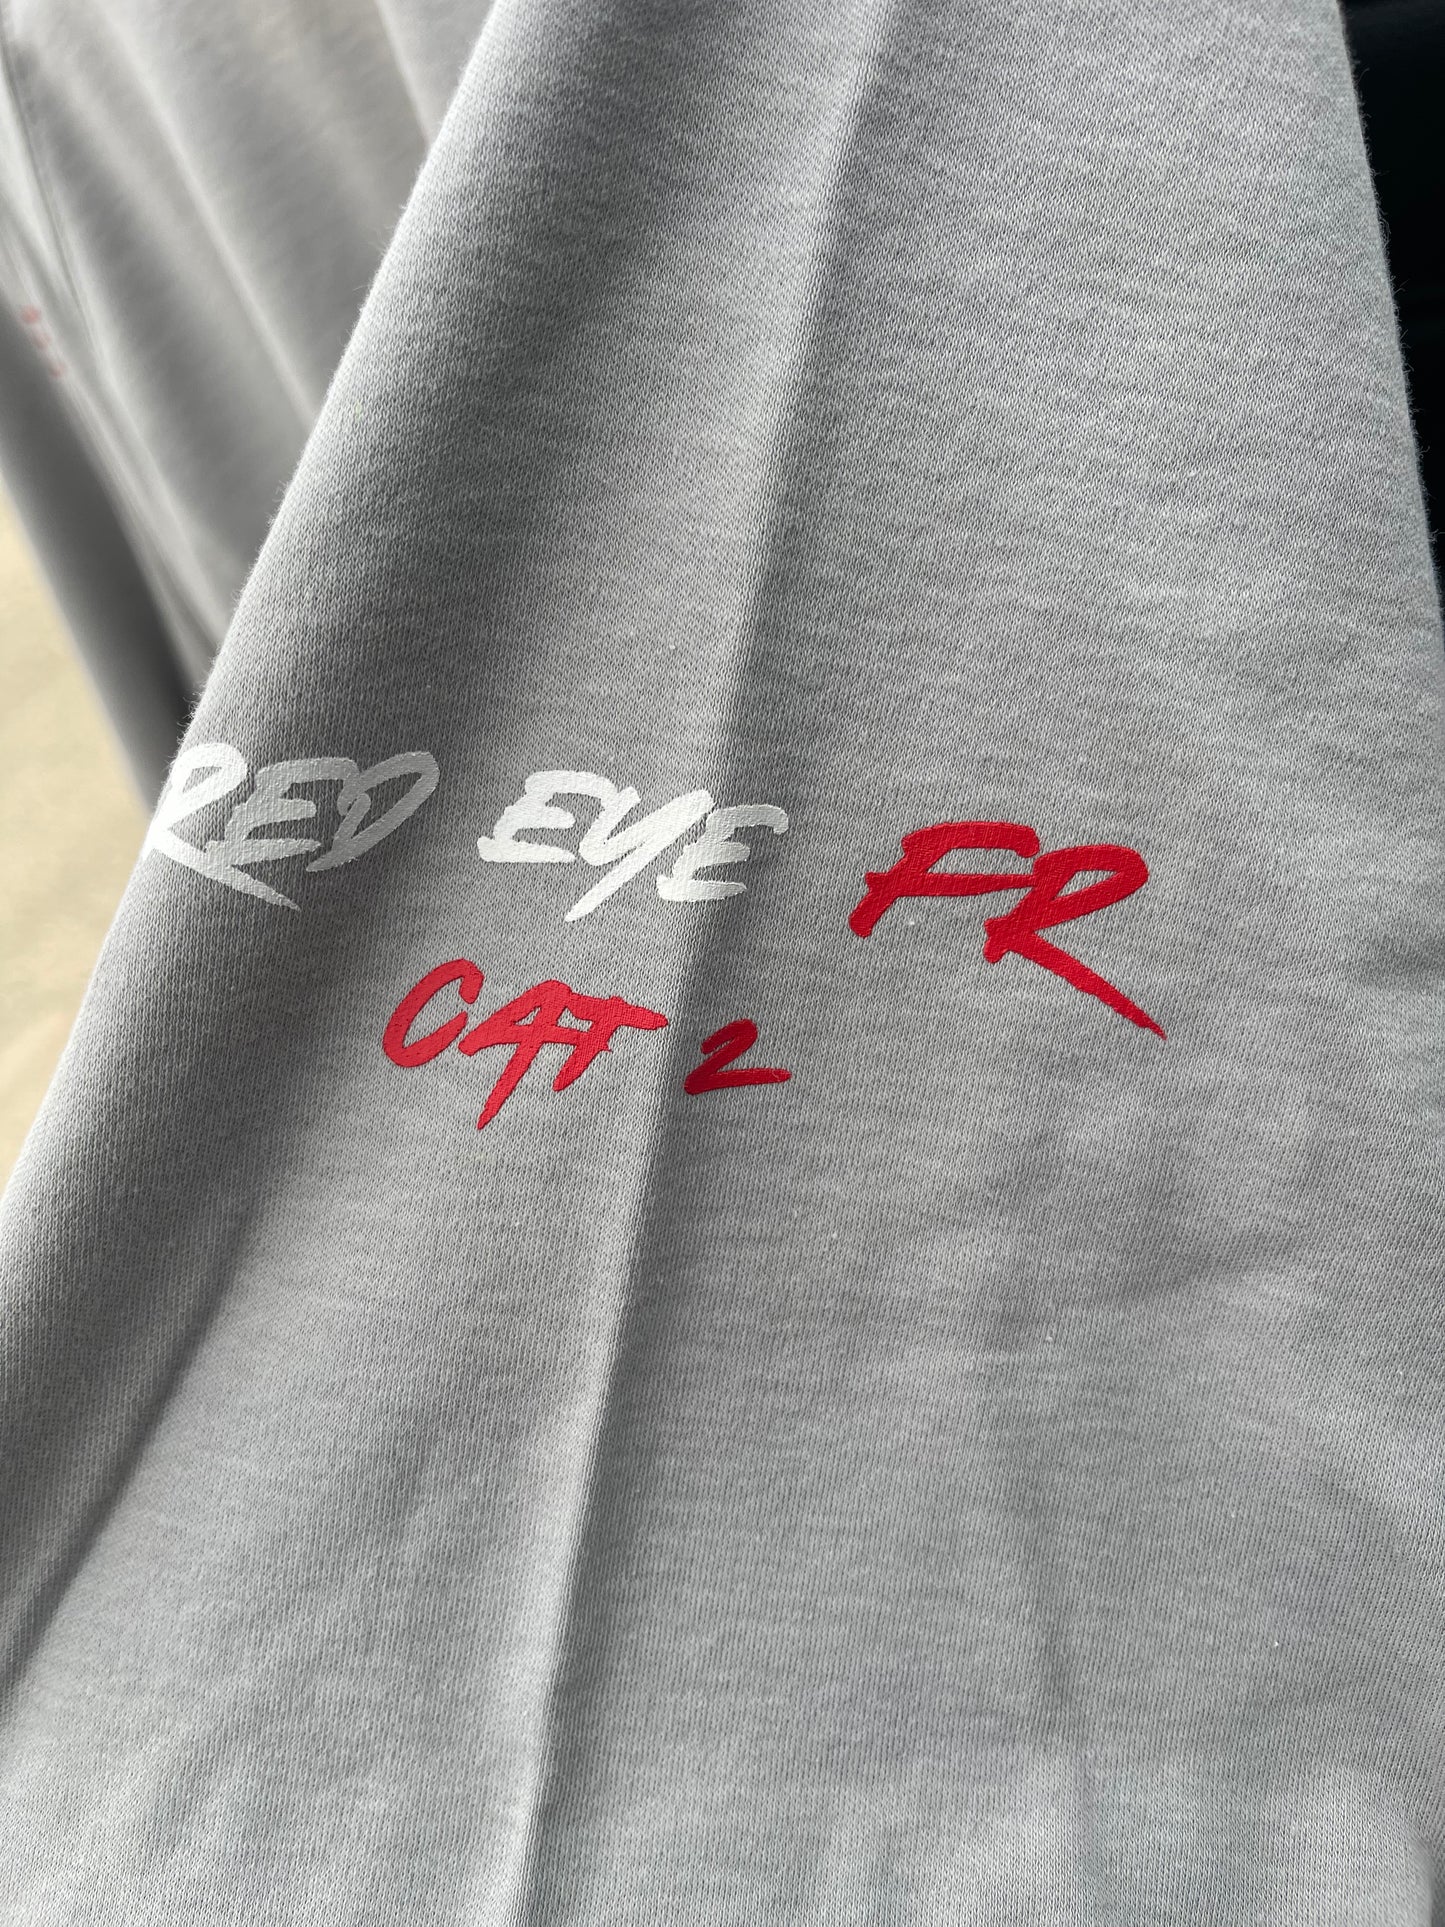 Red Eye FR Cat 2 Shirt